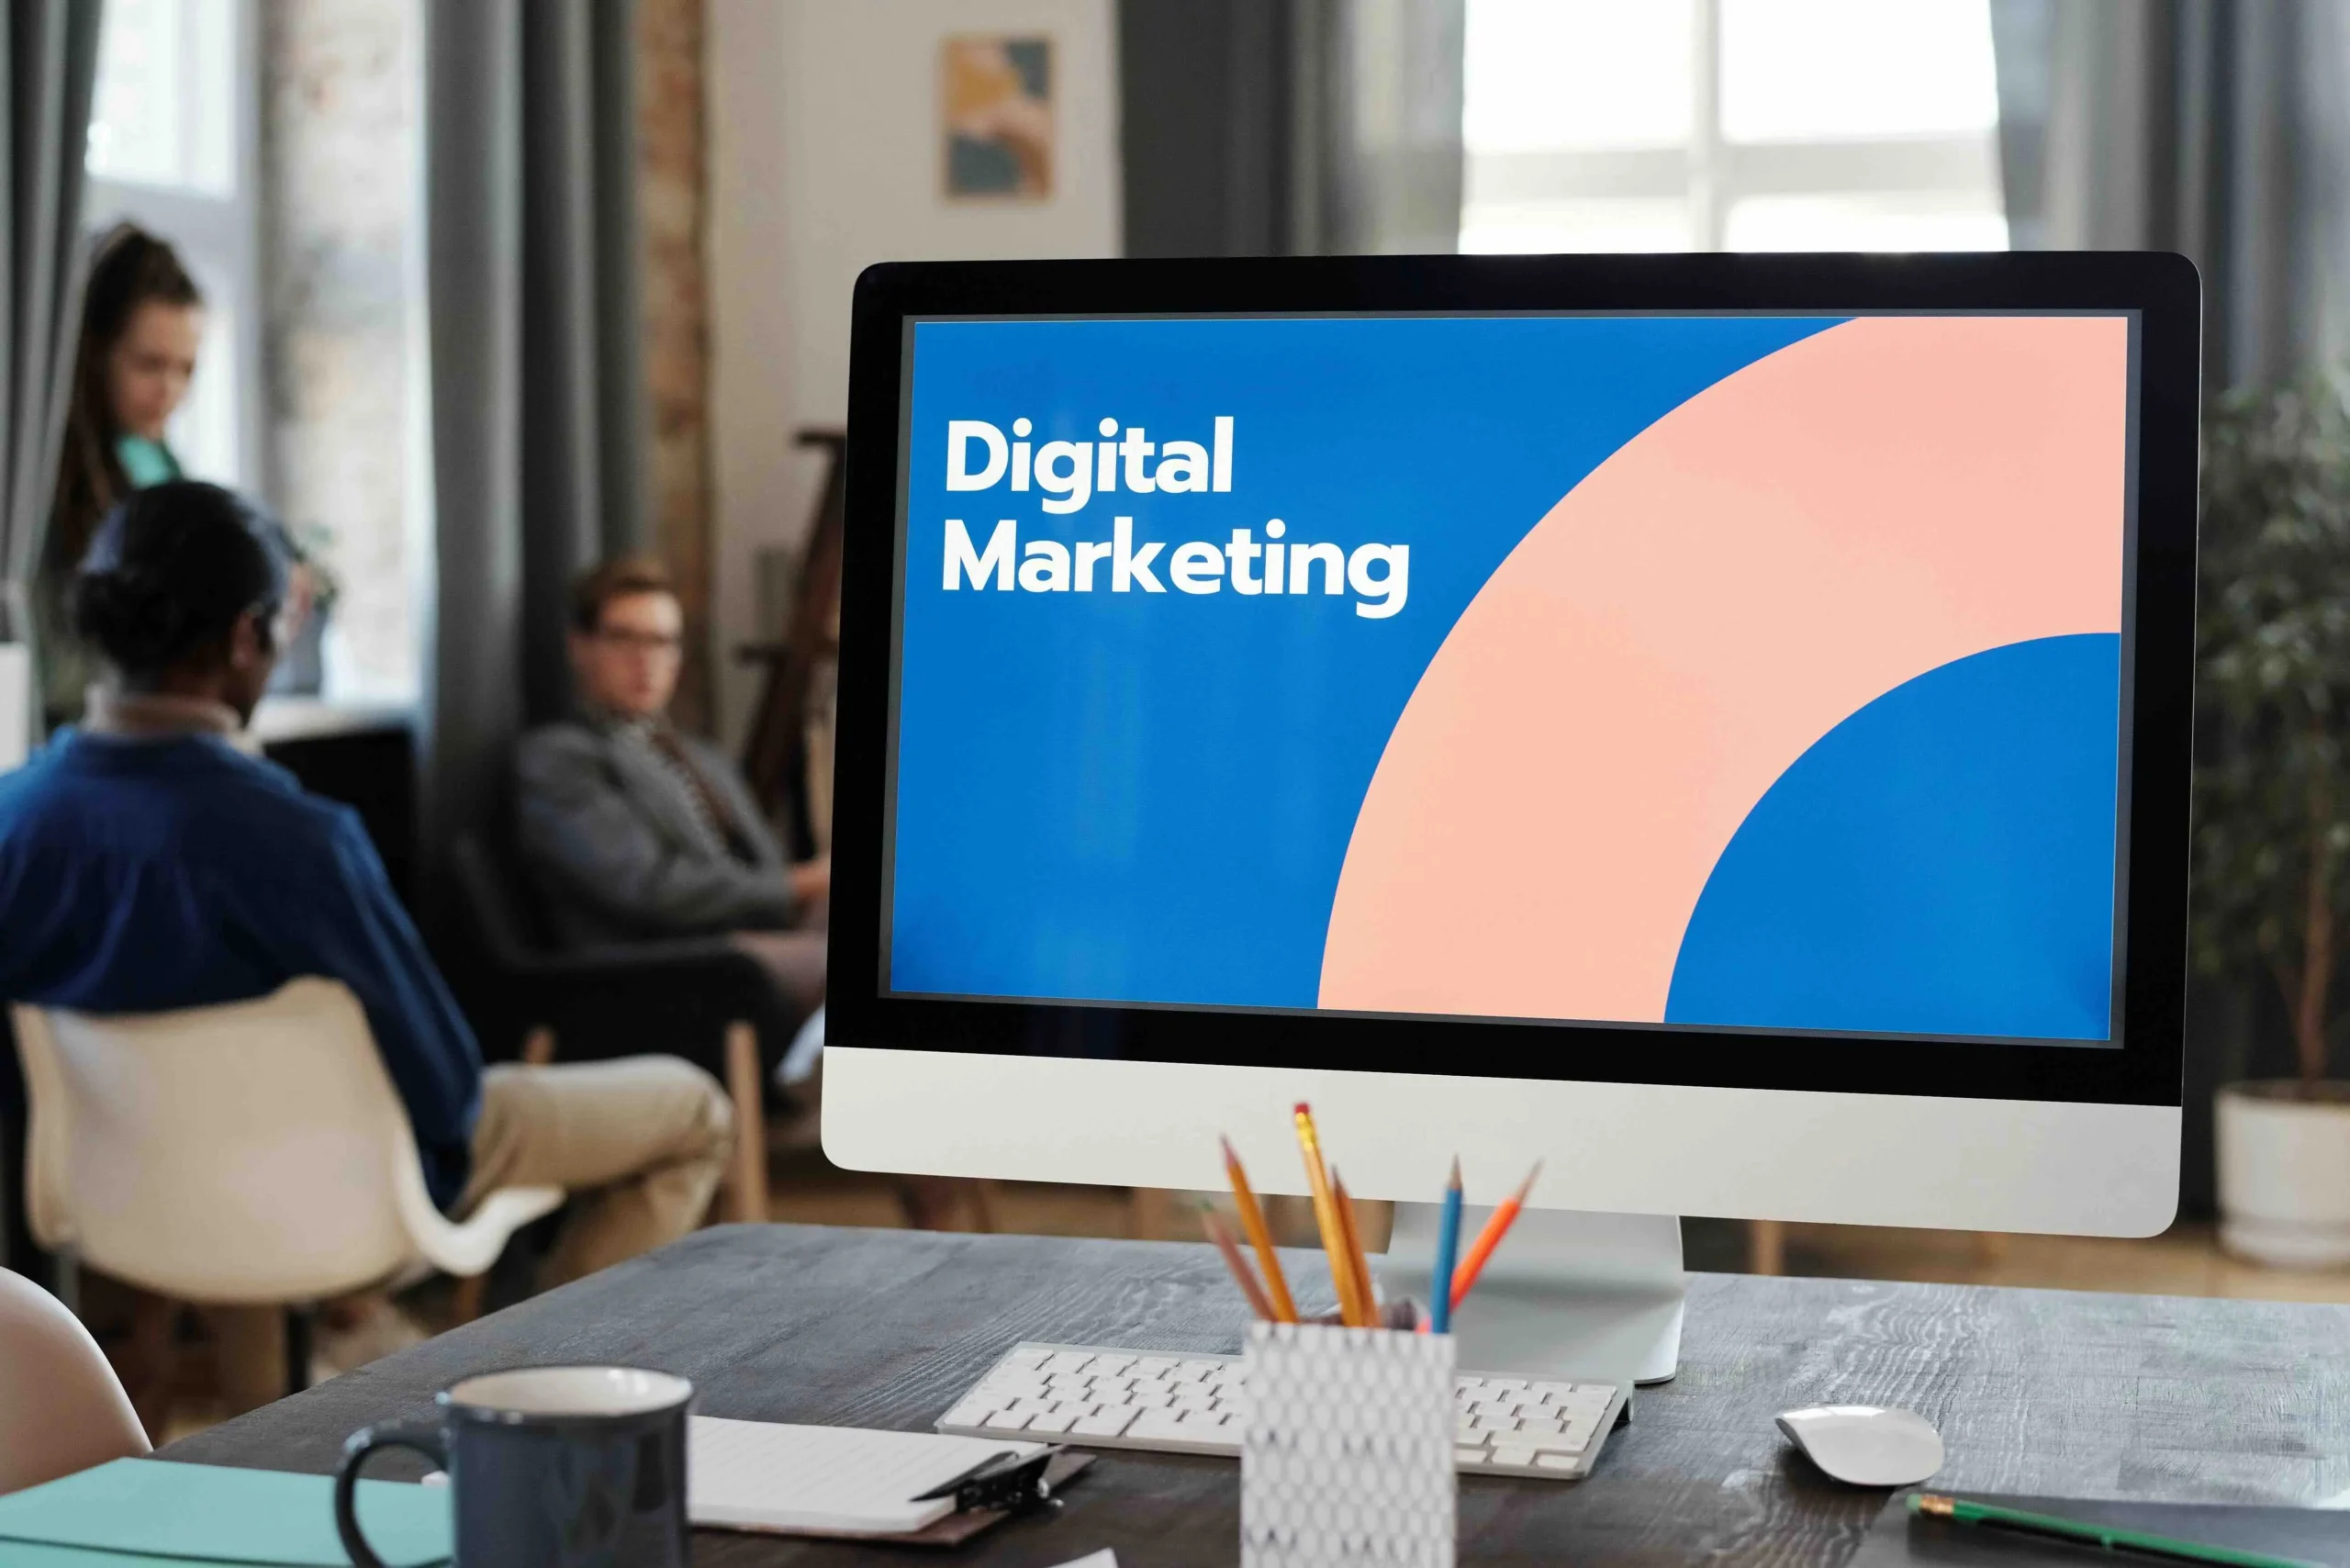 computer monitor showing digital marketing ads